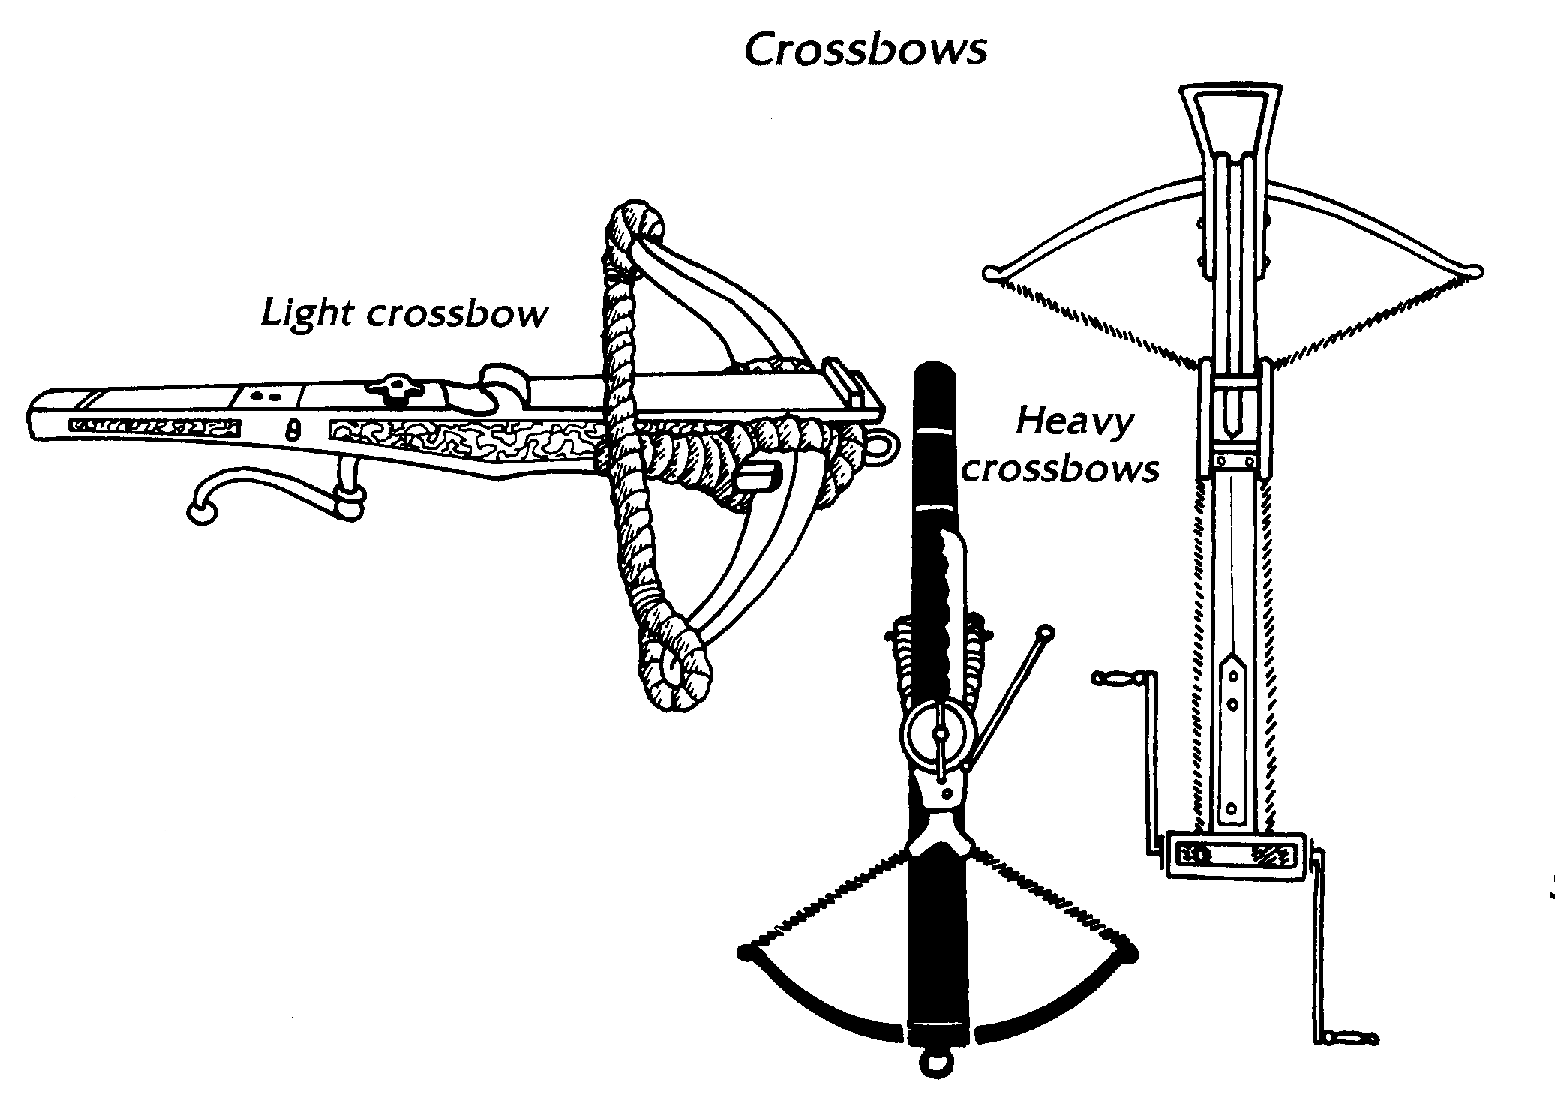 hand crossbow vs light crossbow